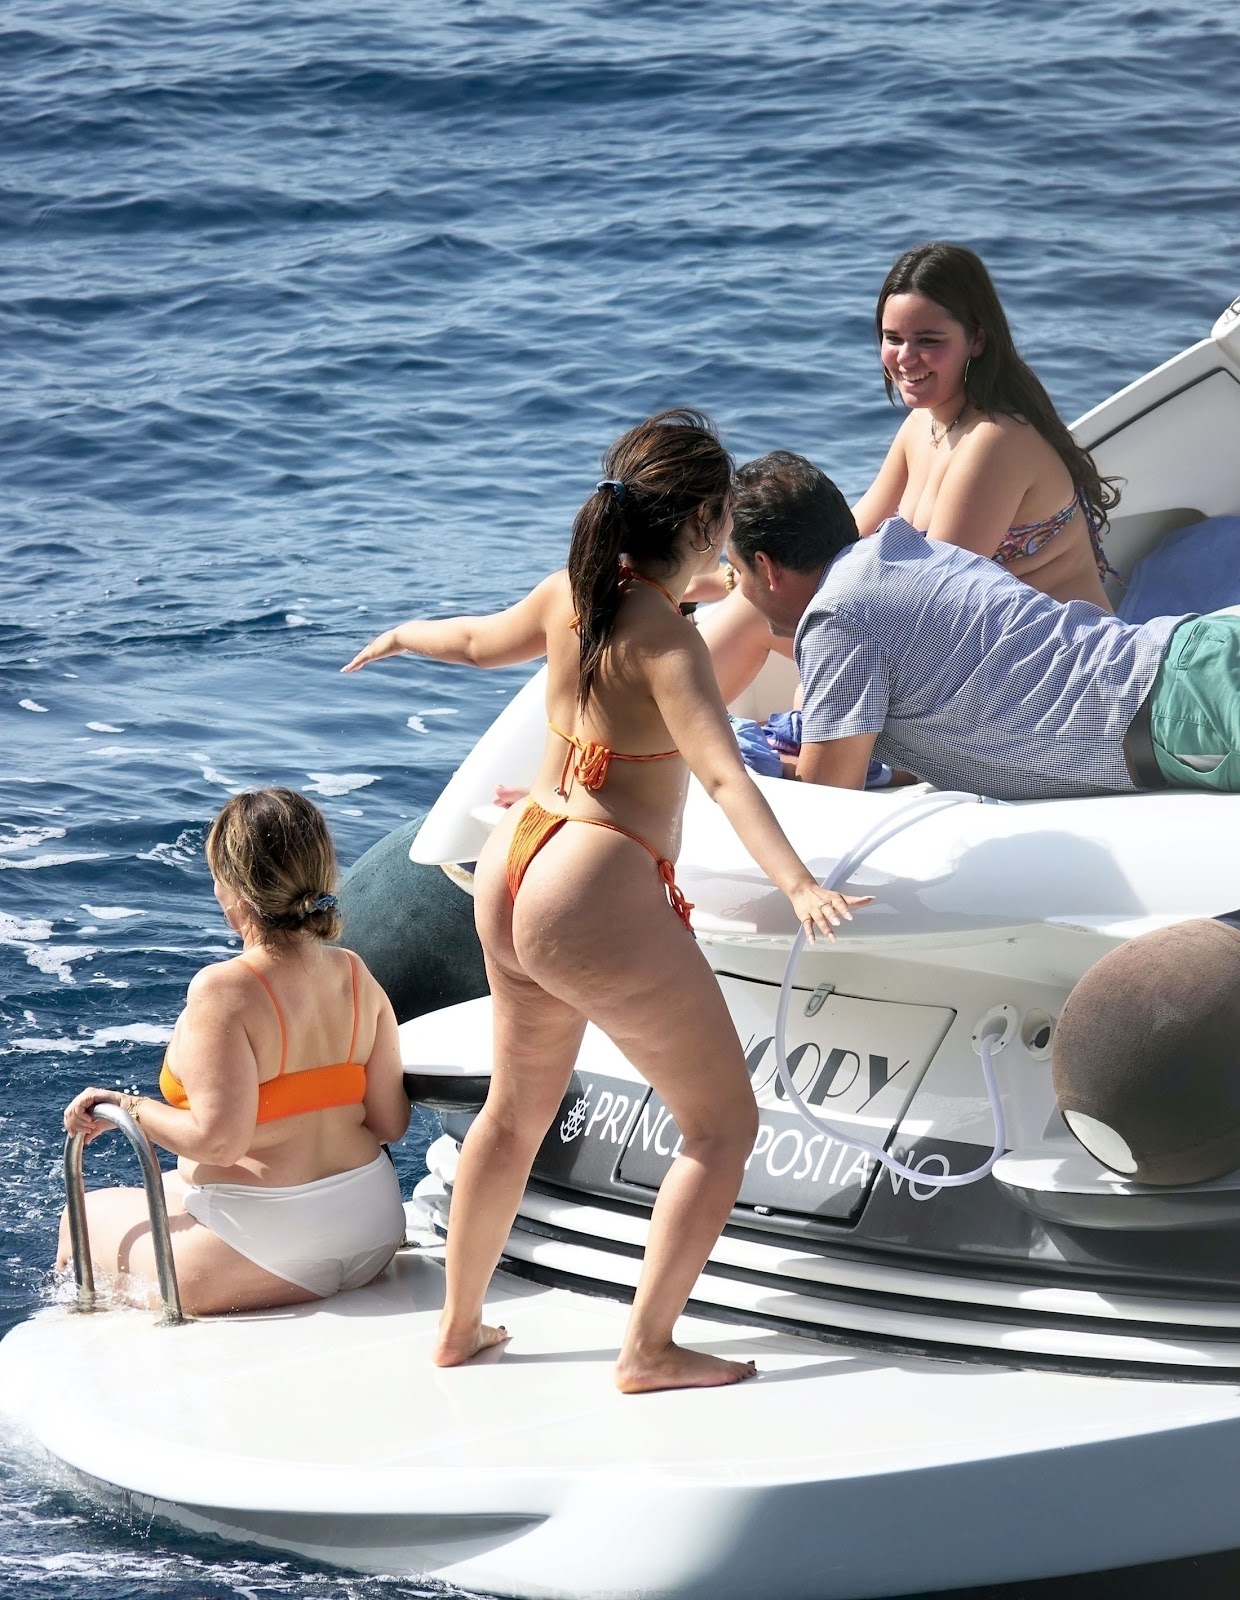 Camila Cabello in a orange bikini while enjoying a dip in the ocean off the coast of Capri in Italy.